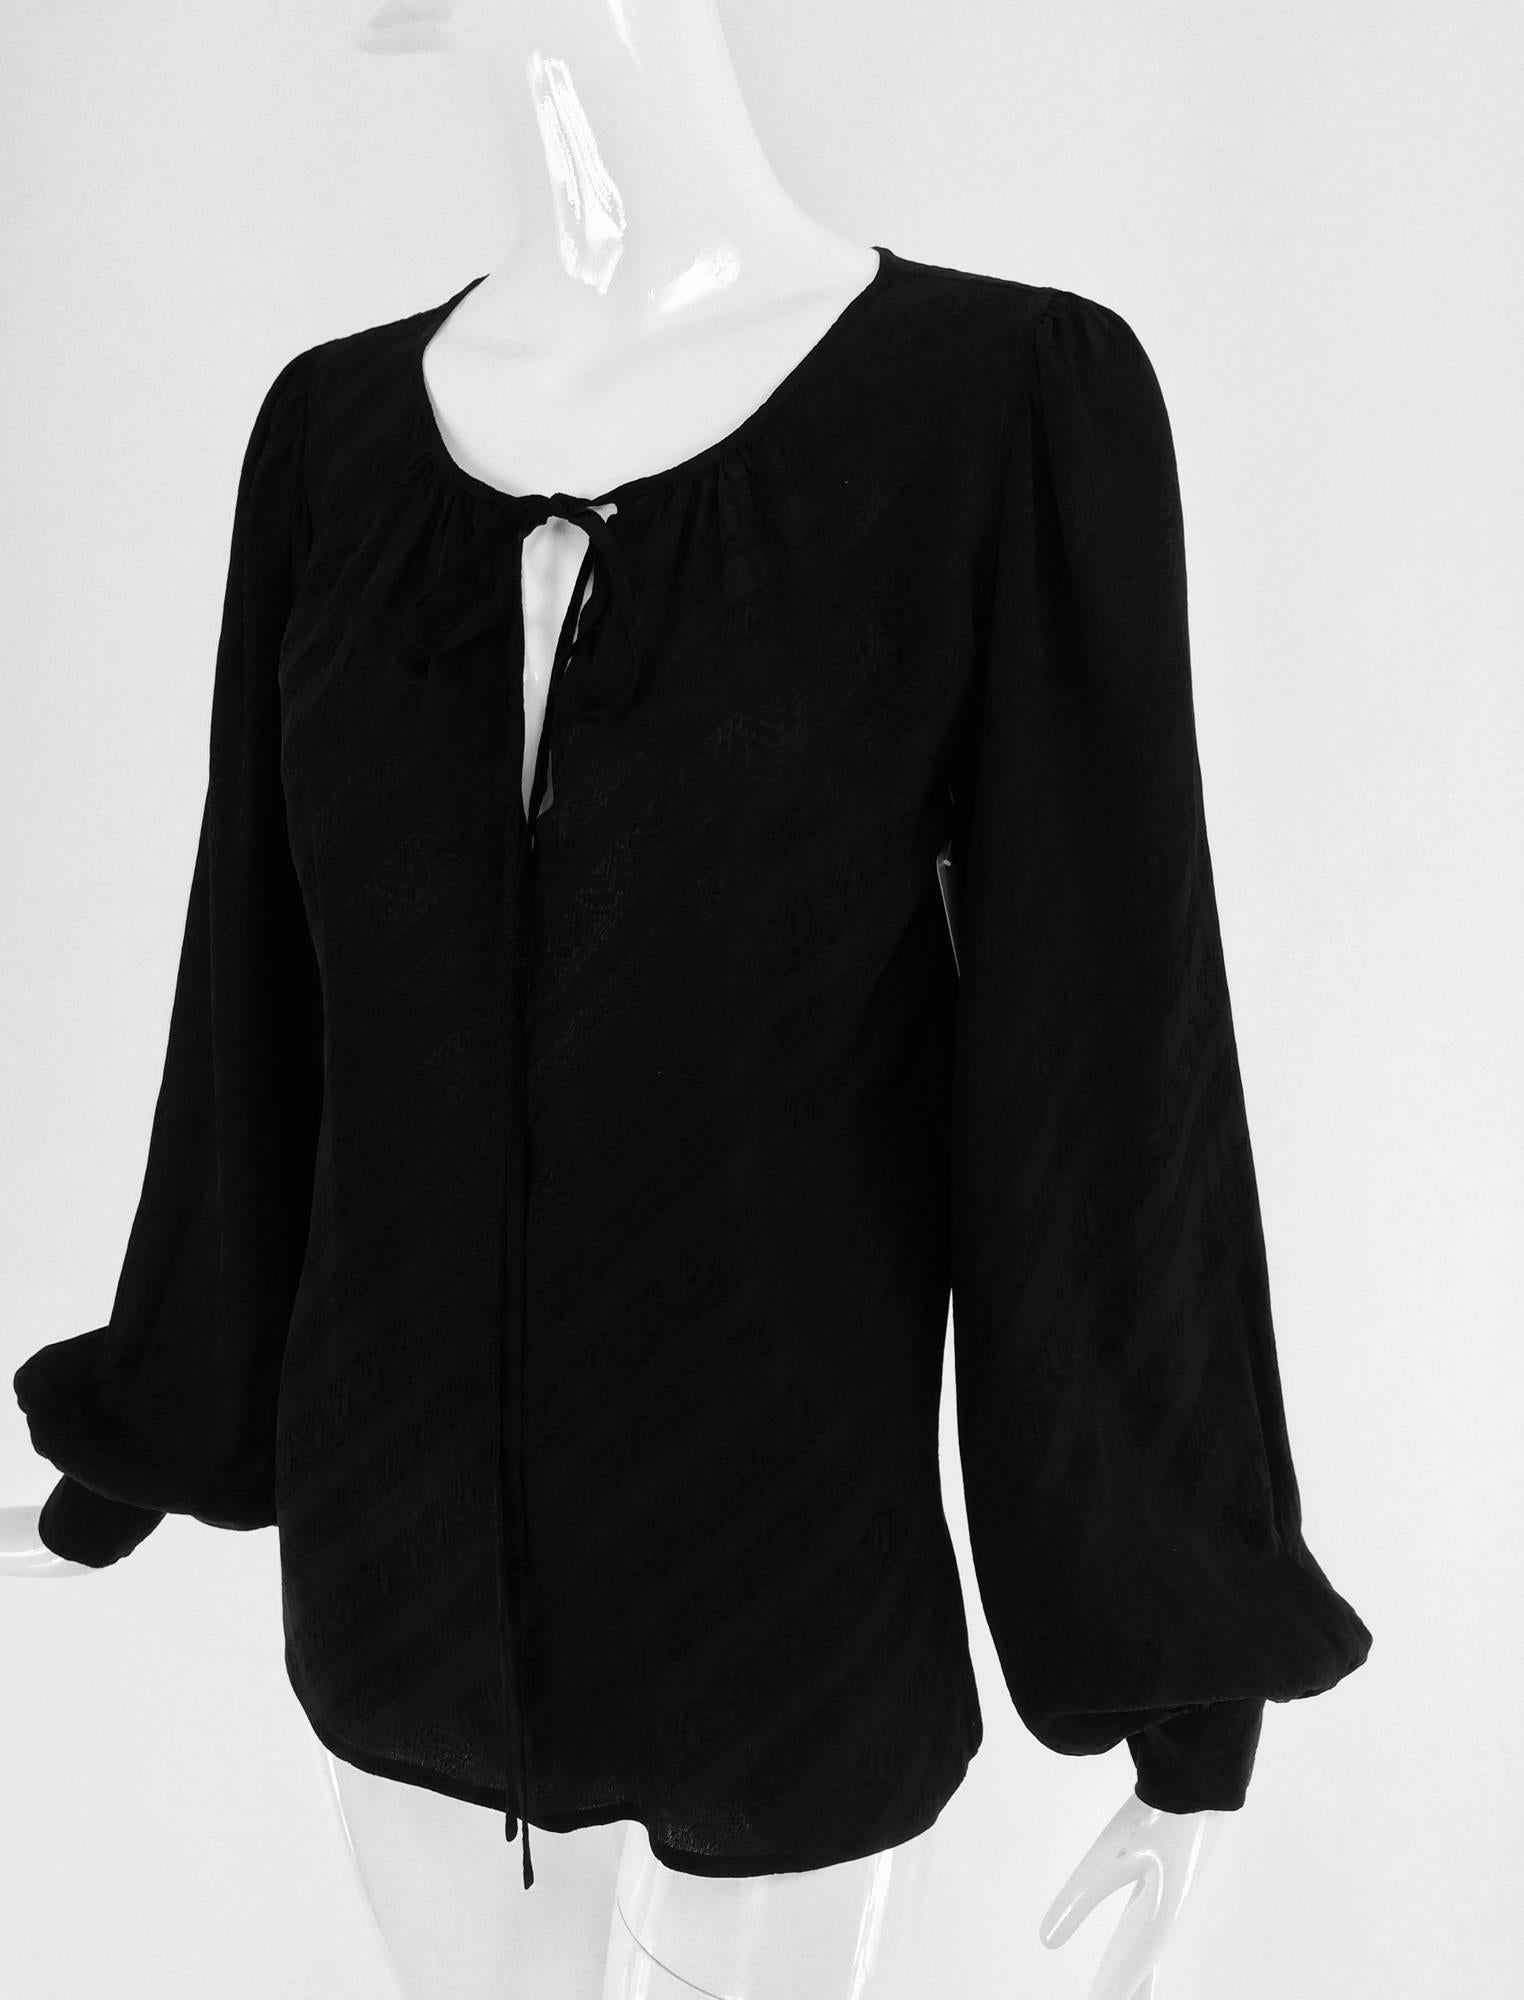 Yves St Laurent black silk jacquard peasant blouse 1970s 1